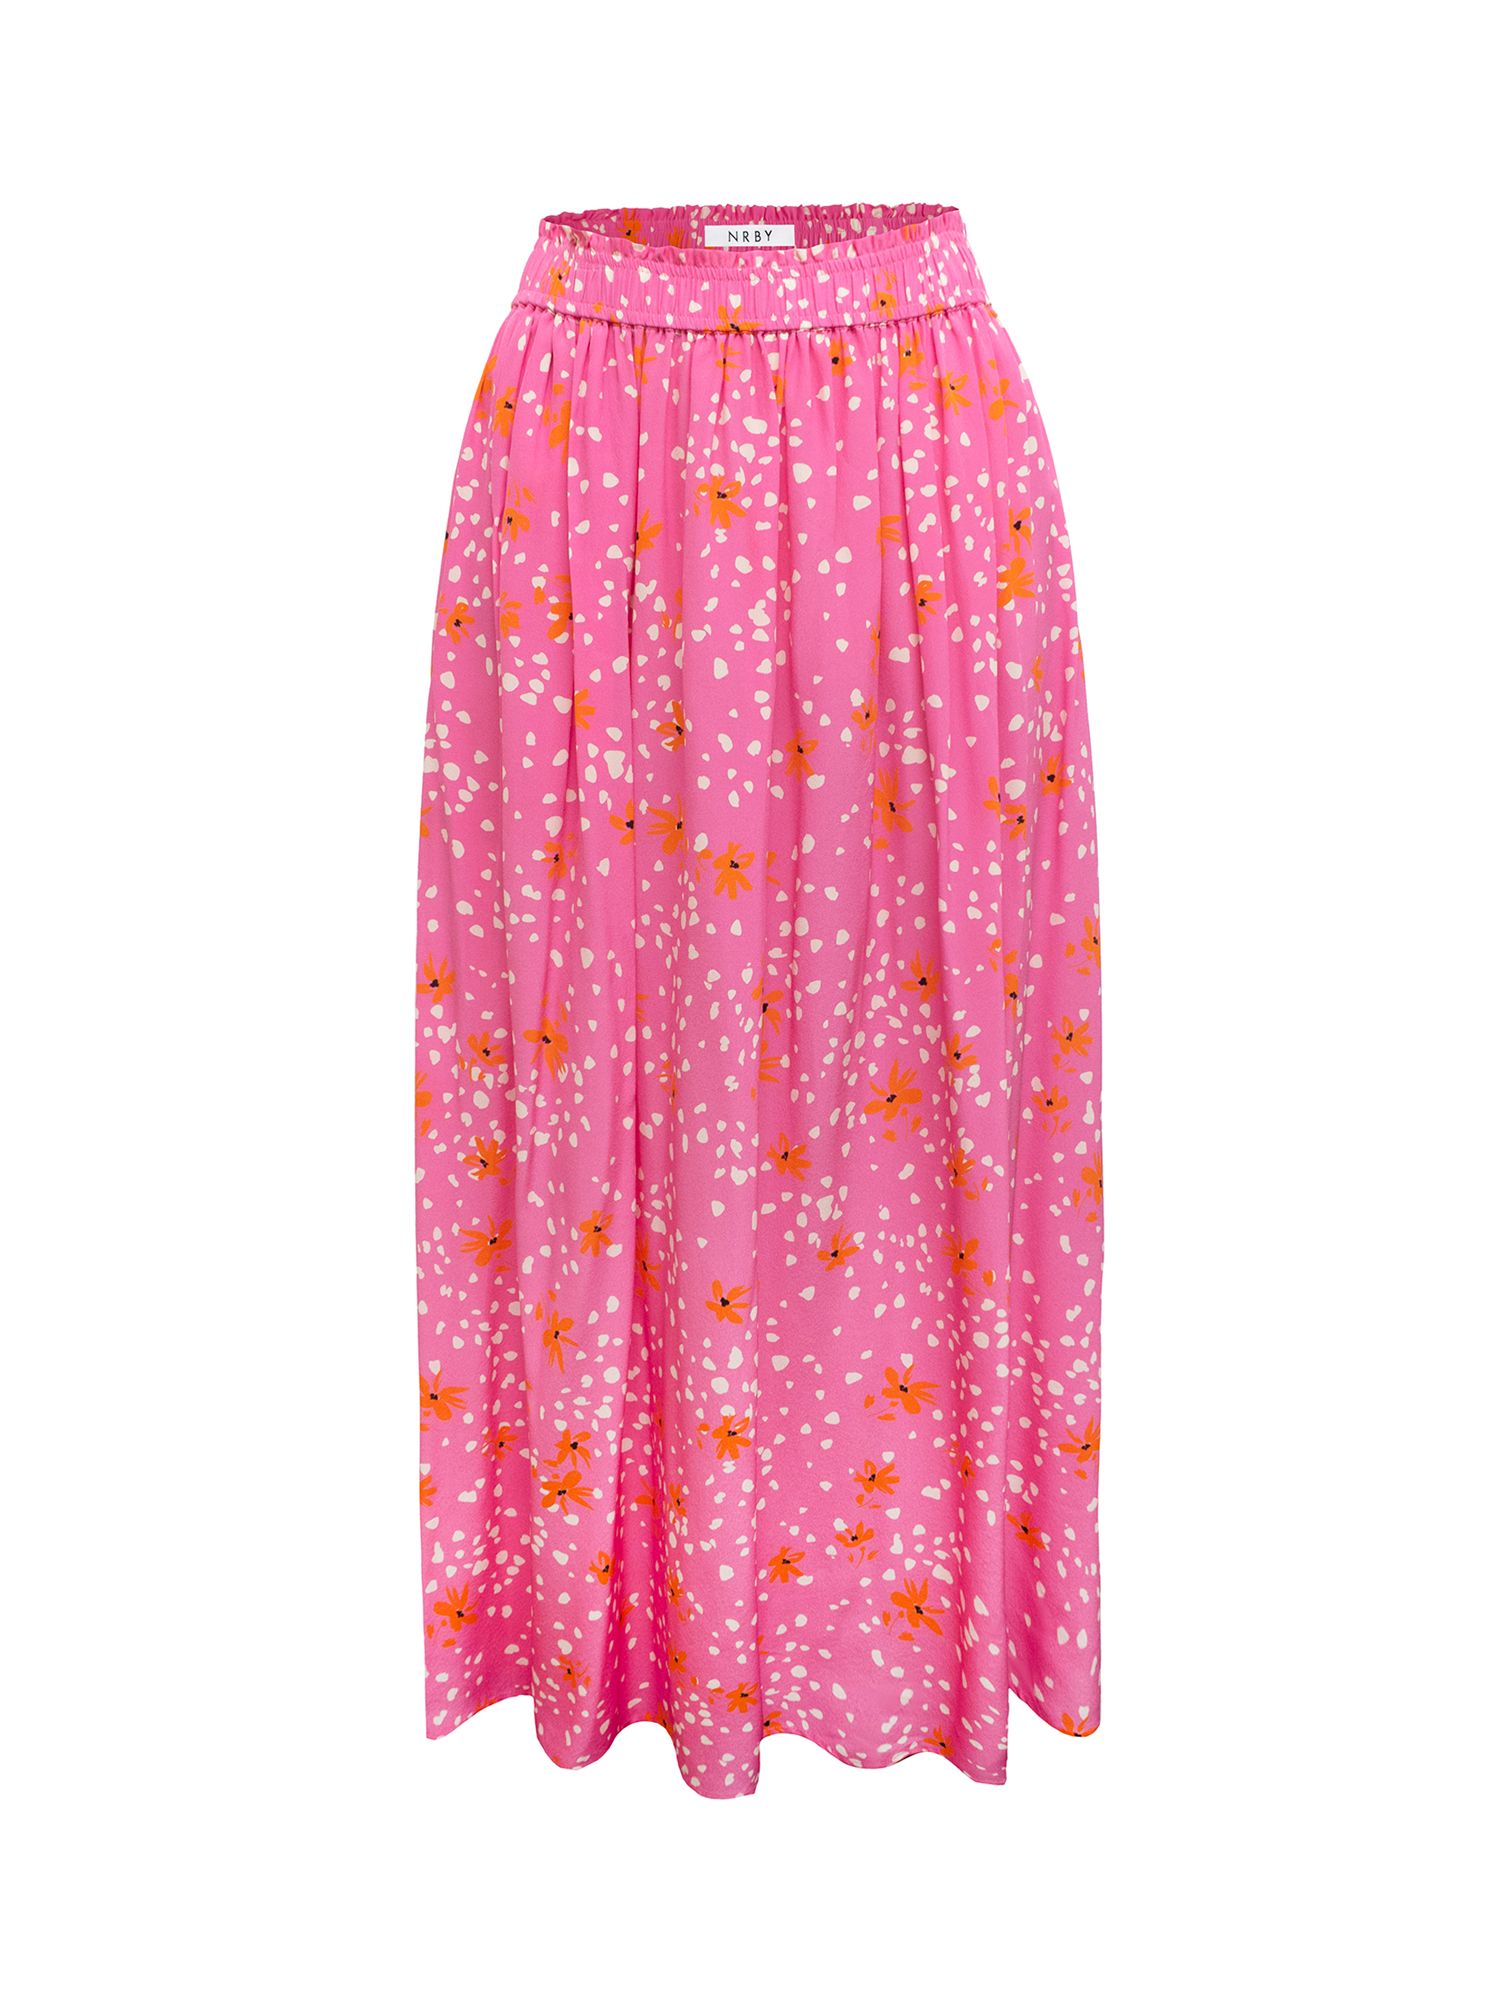 NRBY Karina Silk Floral Pop Skirt, Pink Floral Pop at John Lewis & Partners